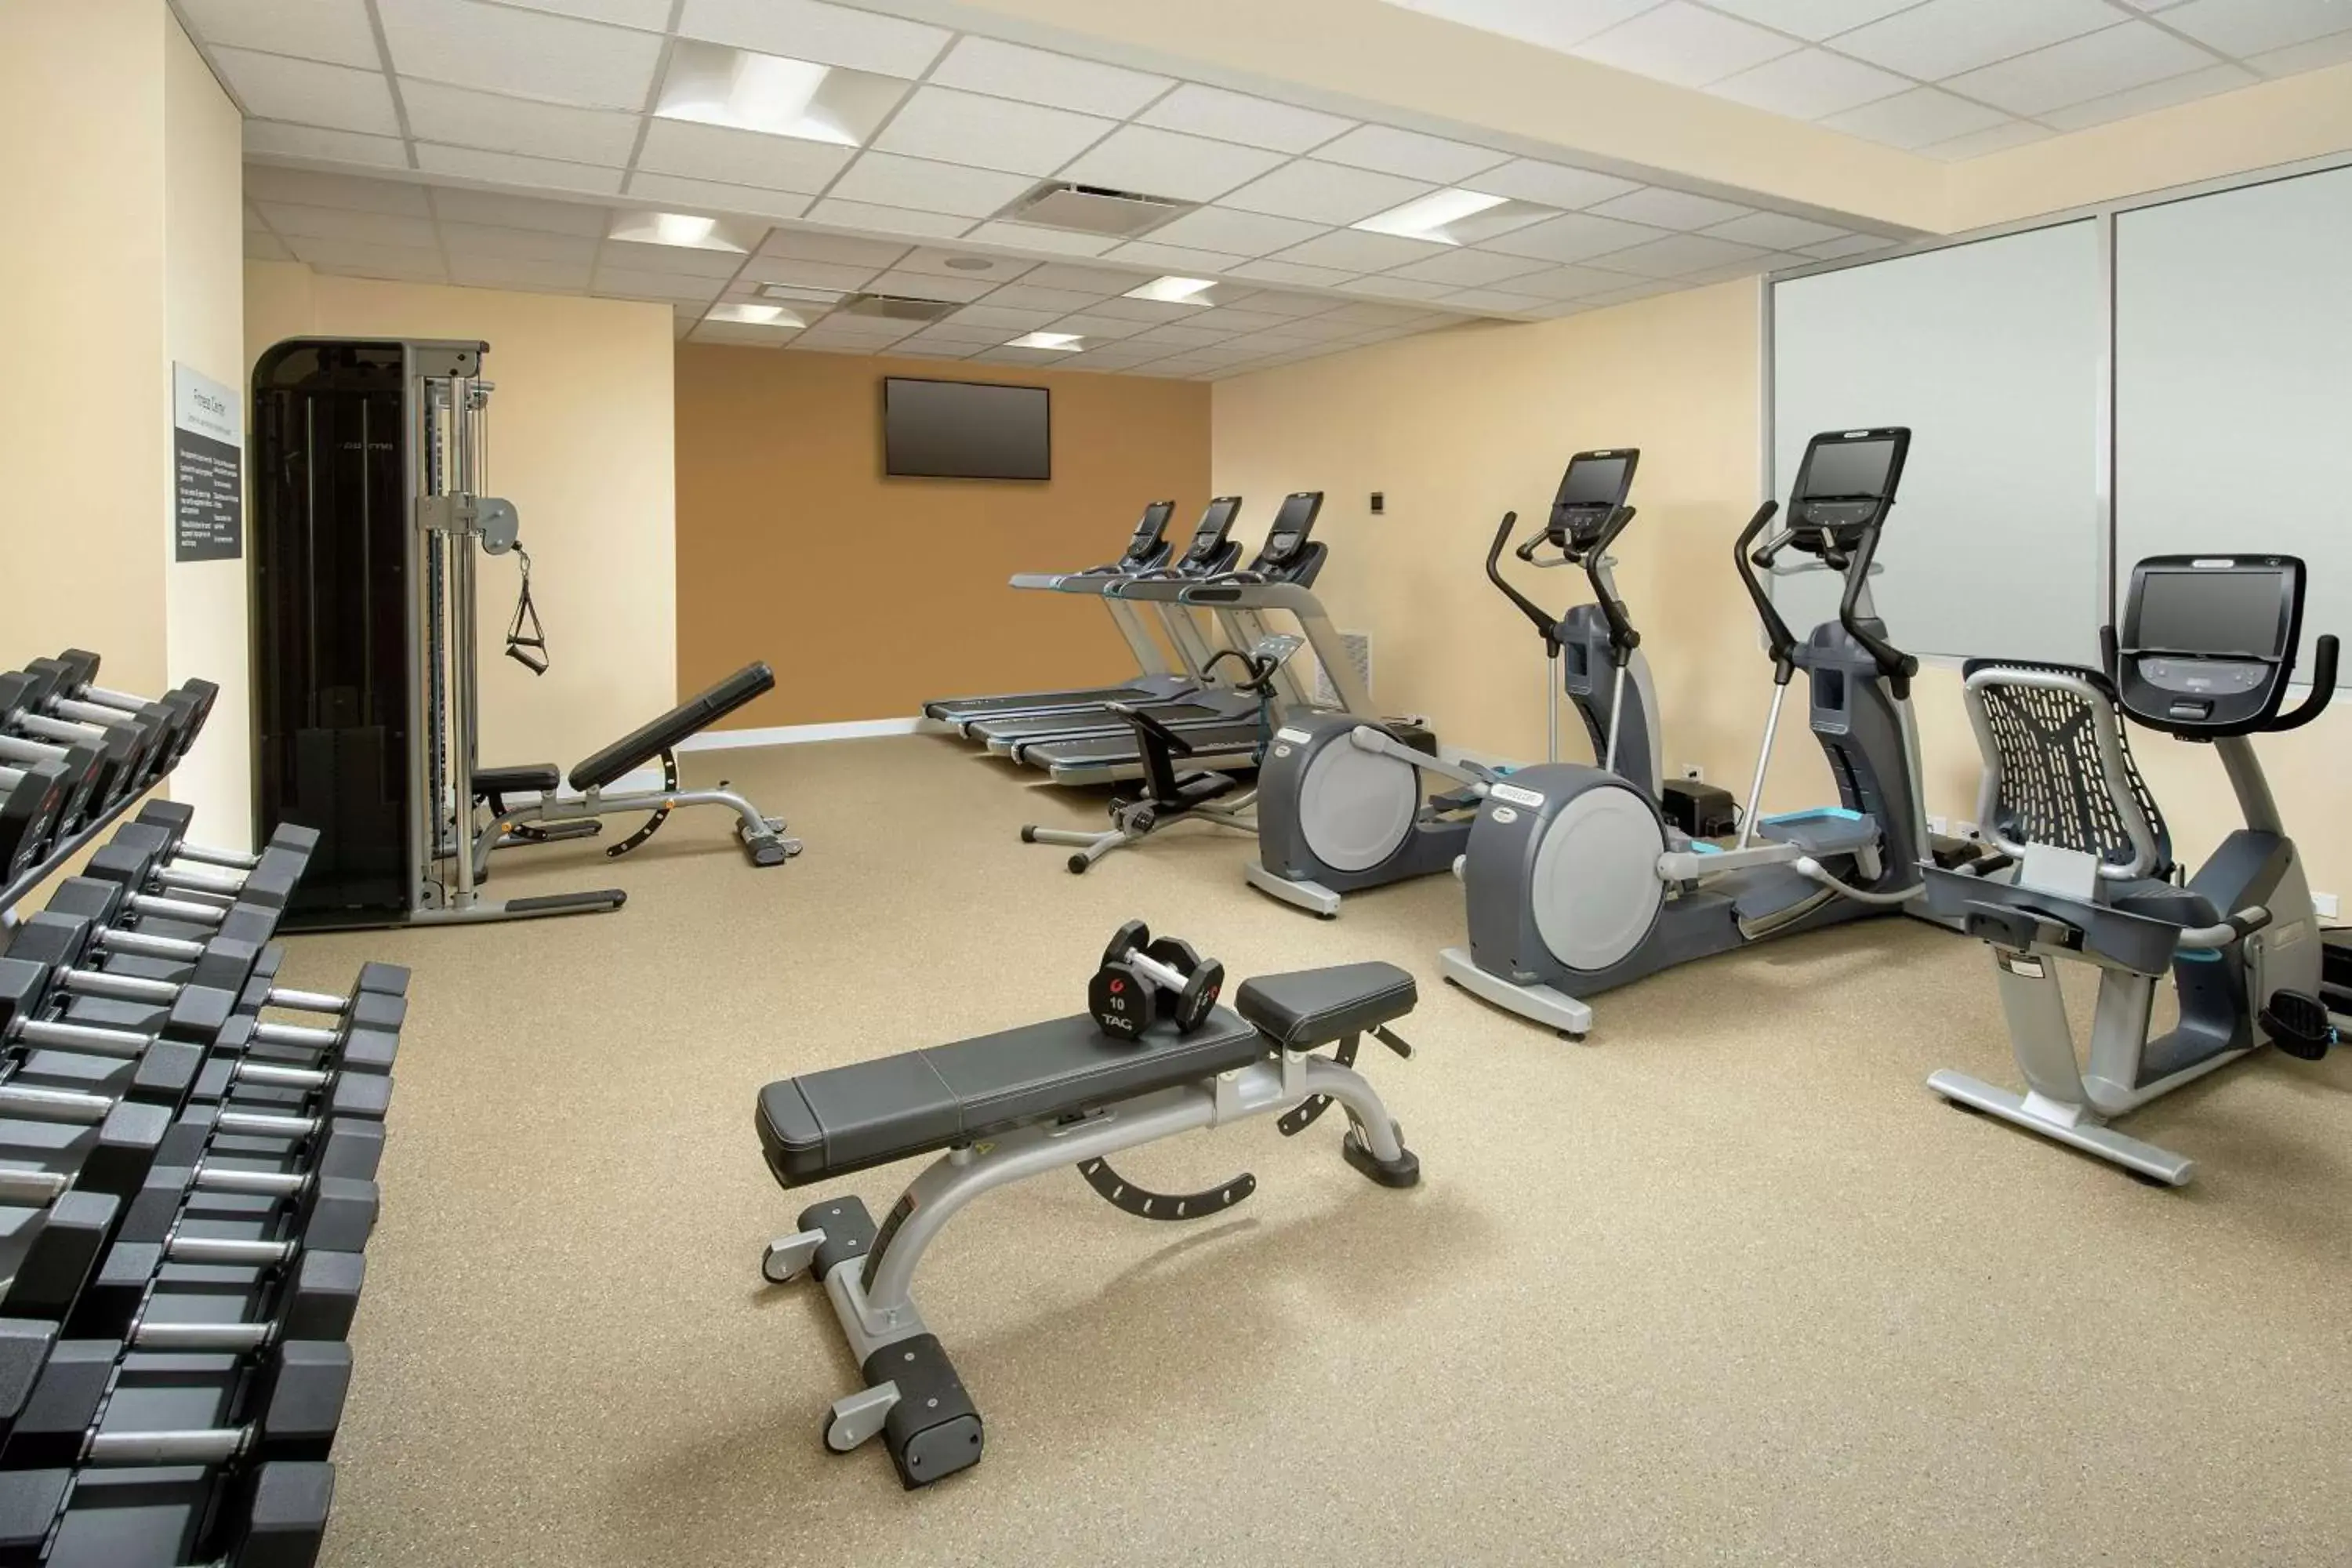 Fitness centre/facilities, Fitness Center/Facilities in Hilton Garden Inn Westchester Dobbs Ferry